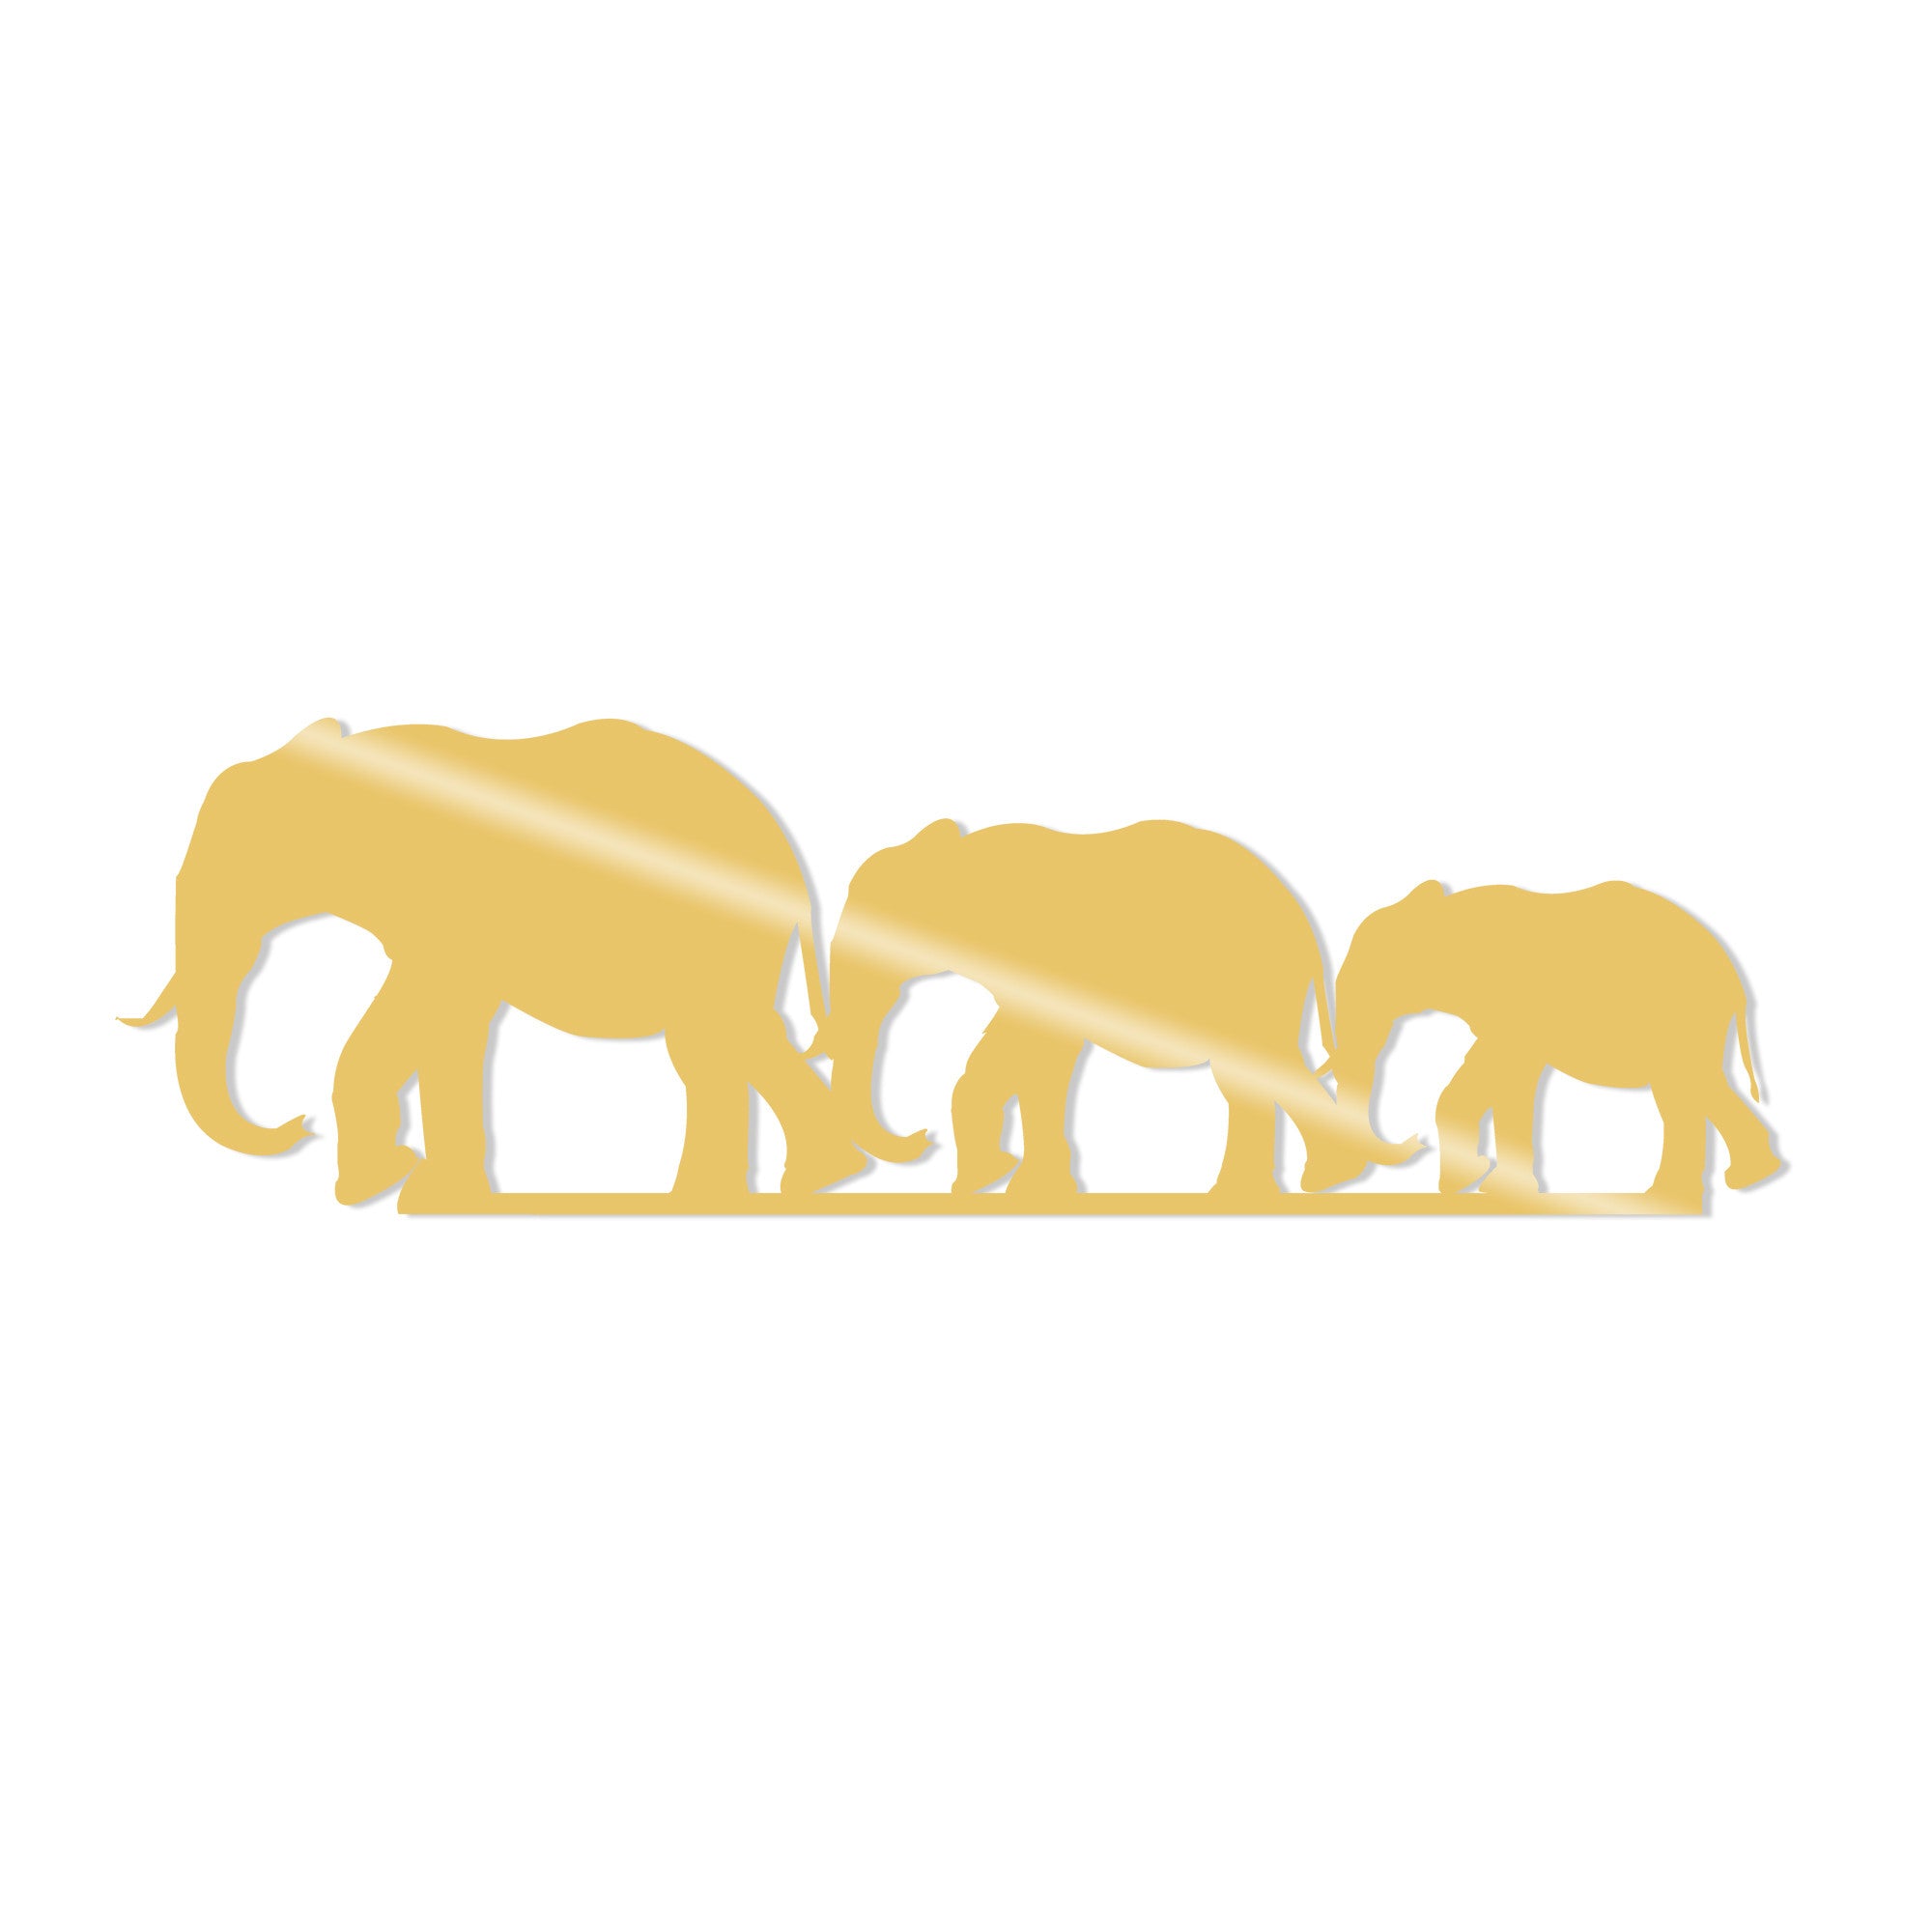 ELEPHANTS METAL DECOR - GOLD